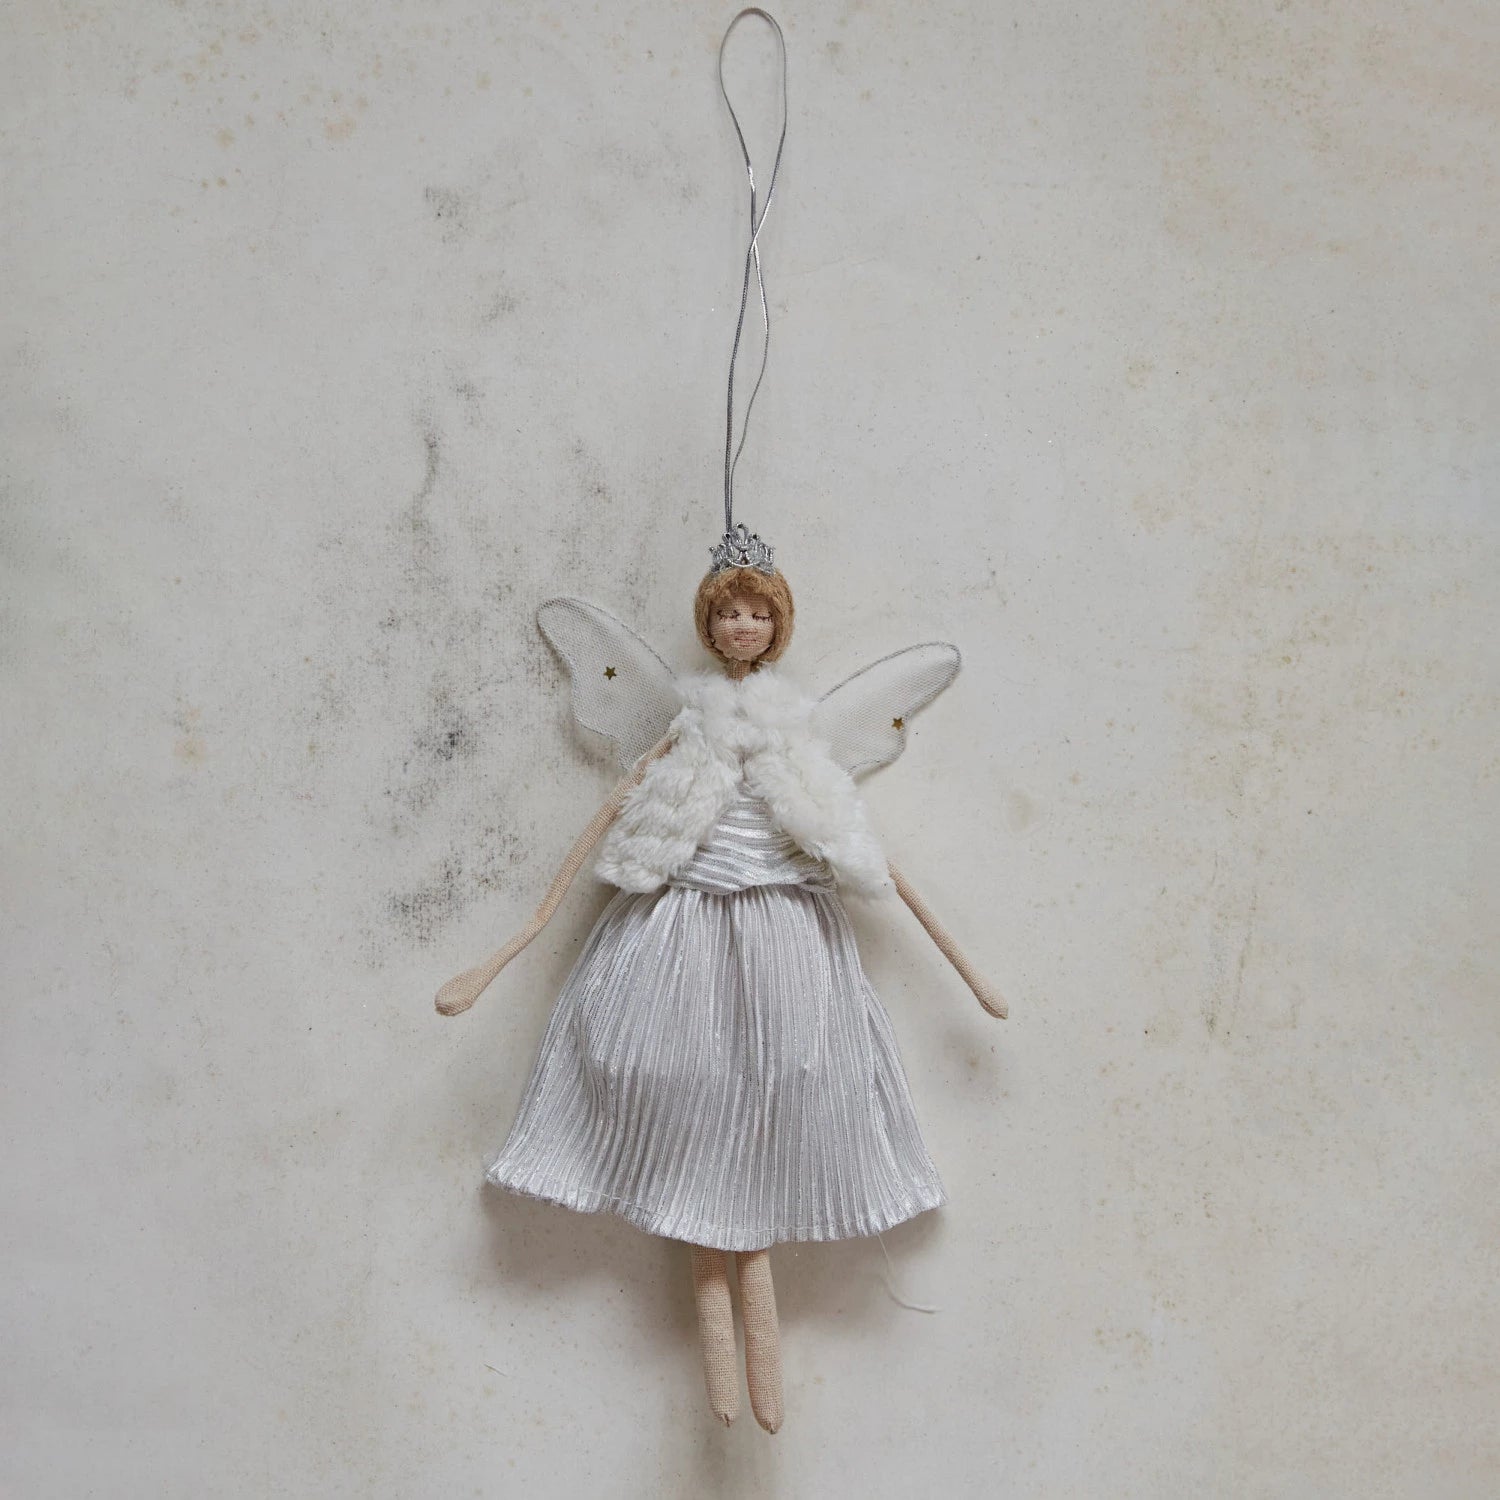 Fabric Glitter Angel Ornament - FINAL SALE